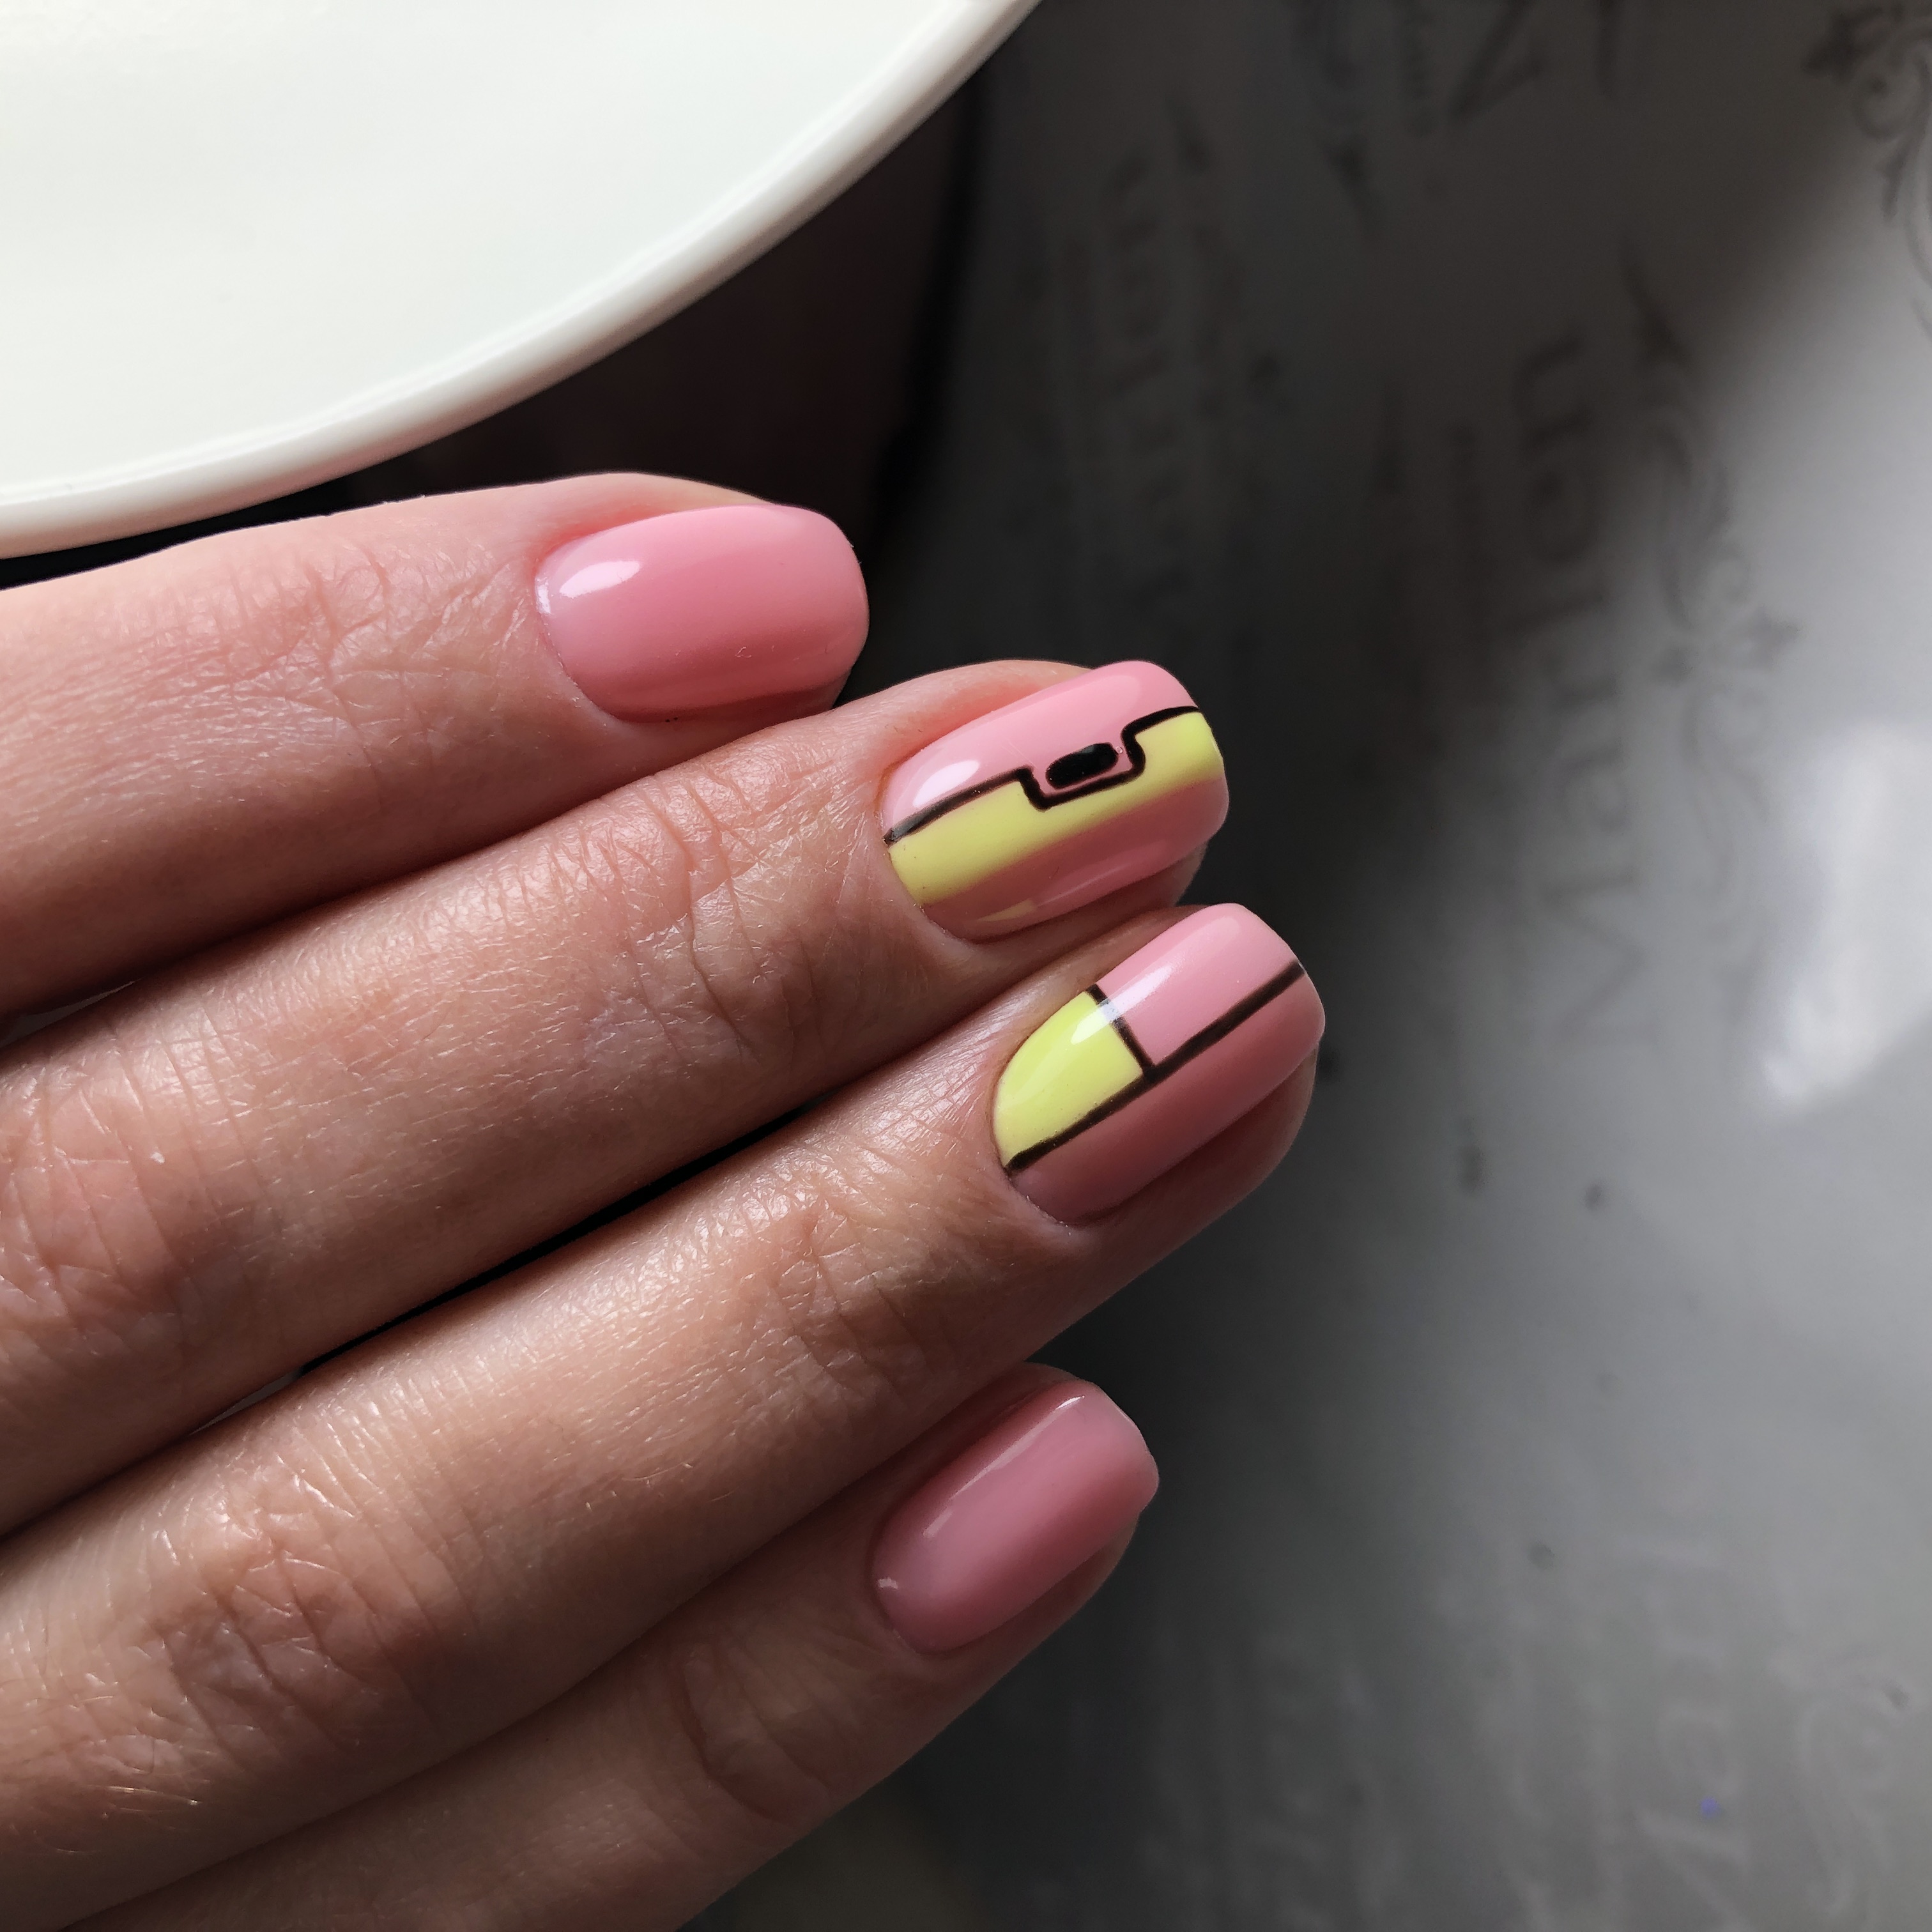 Геометрический маникюр в розовом цвете на короткие ногти.